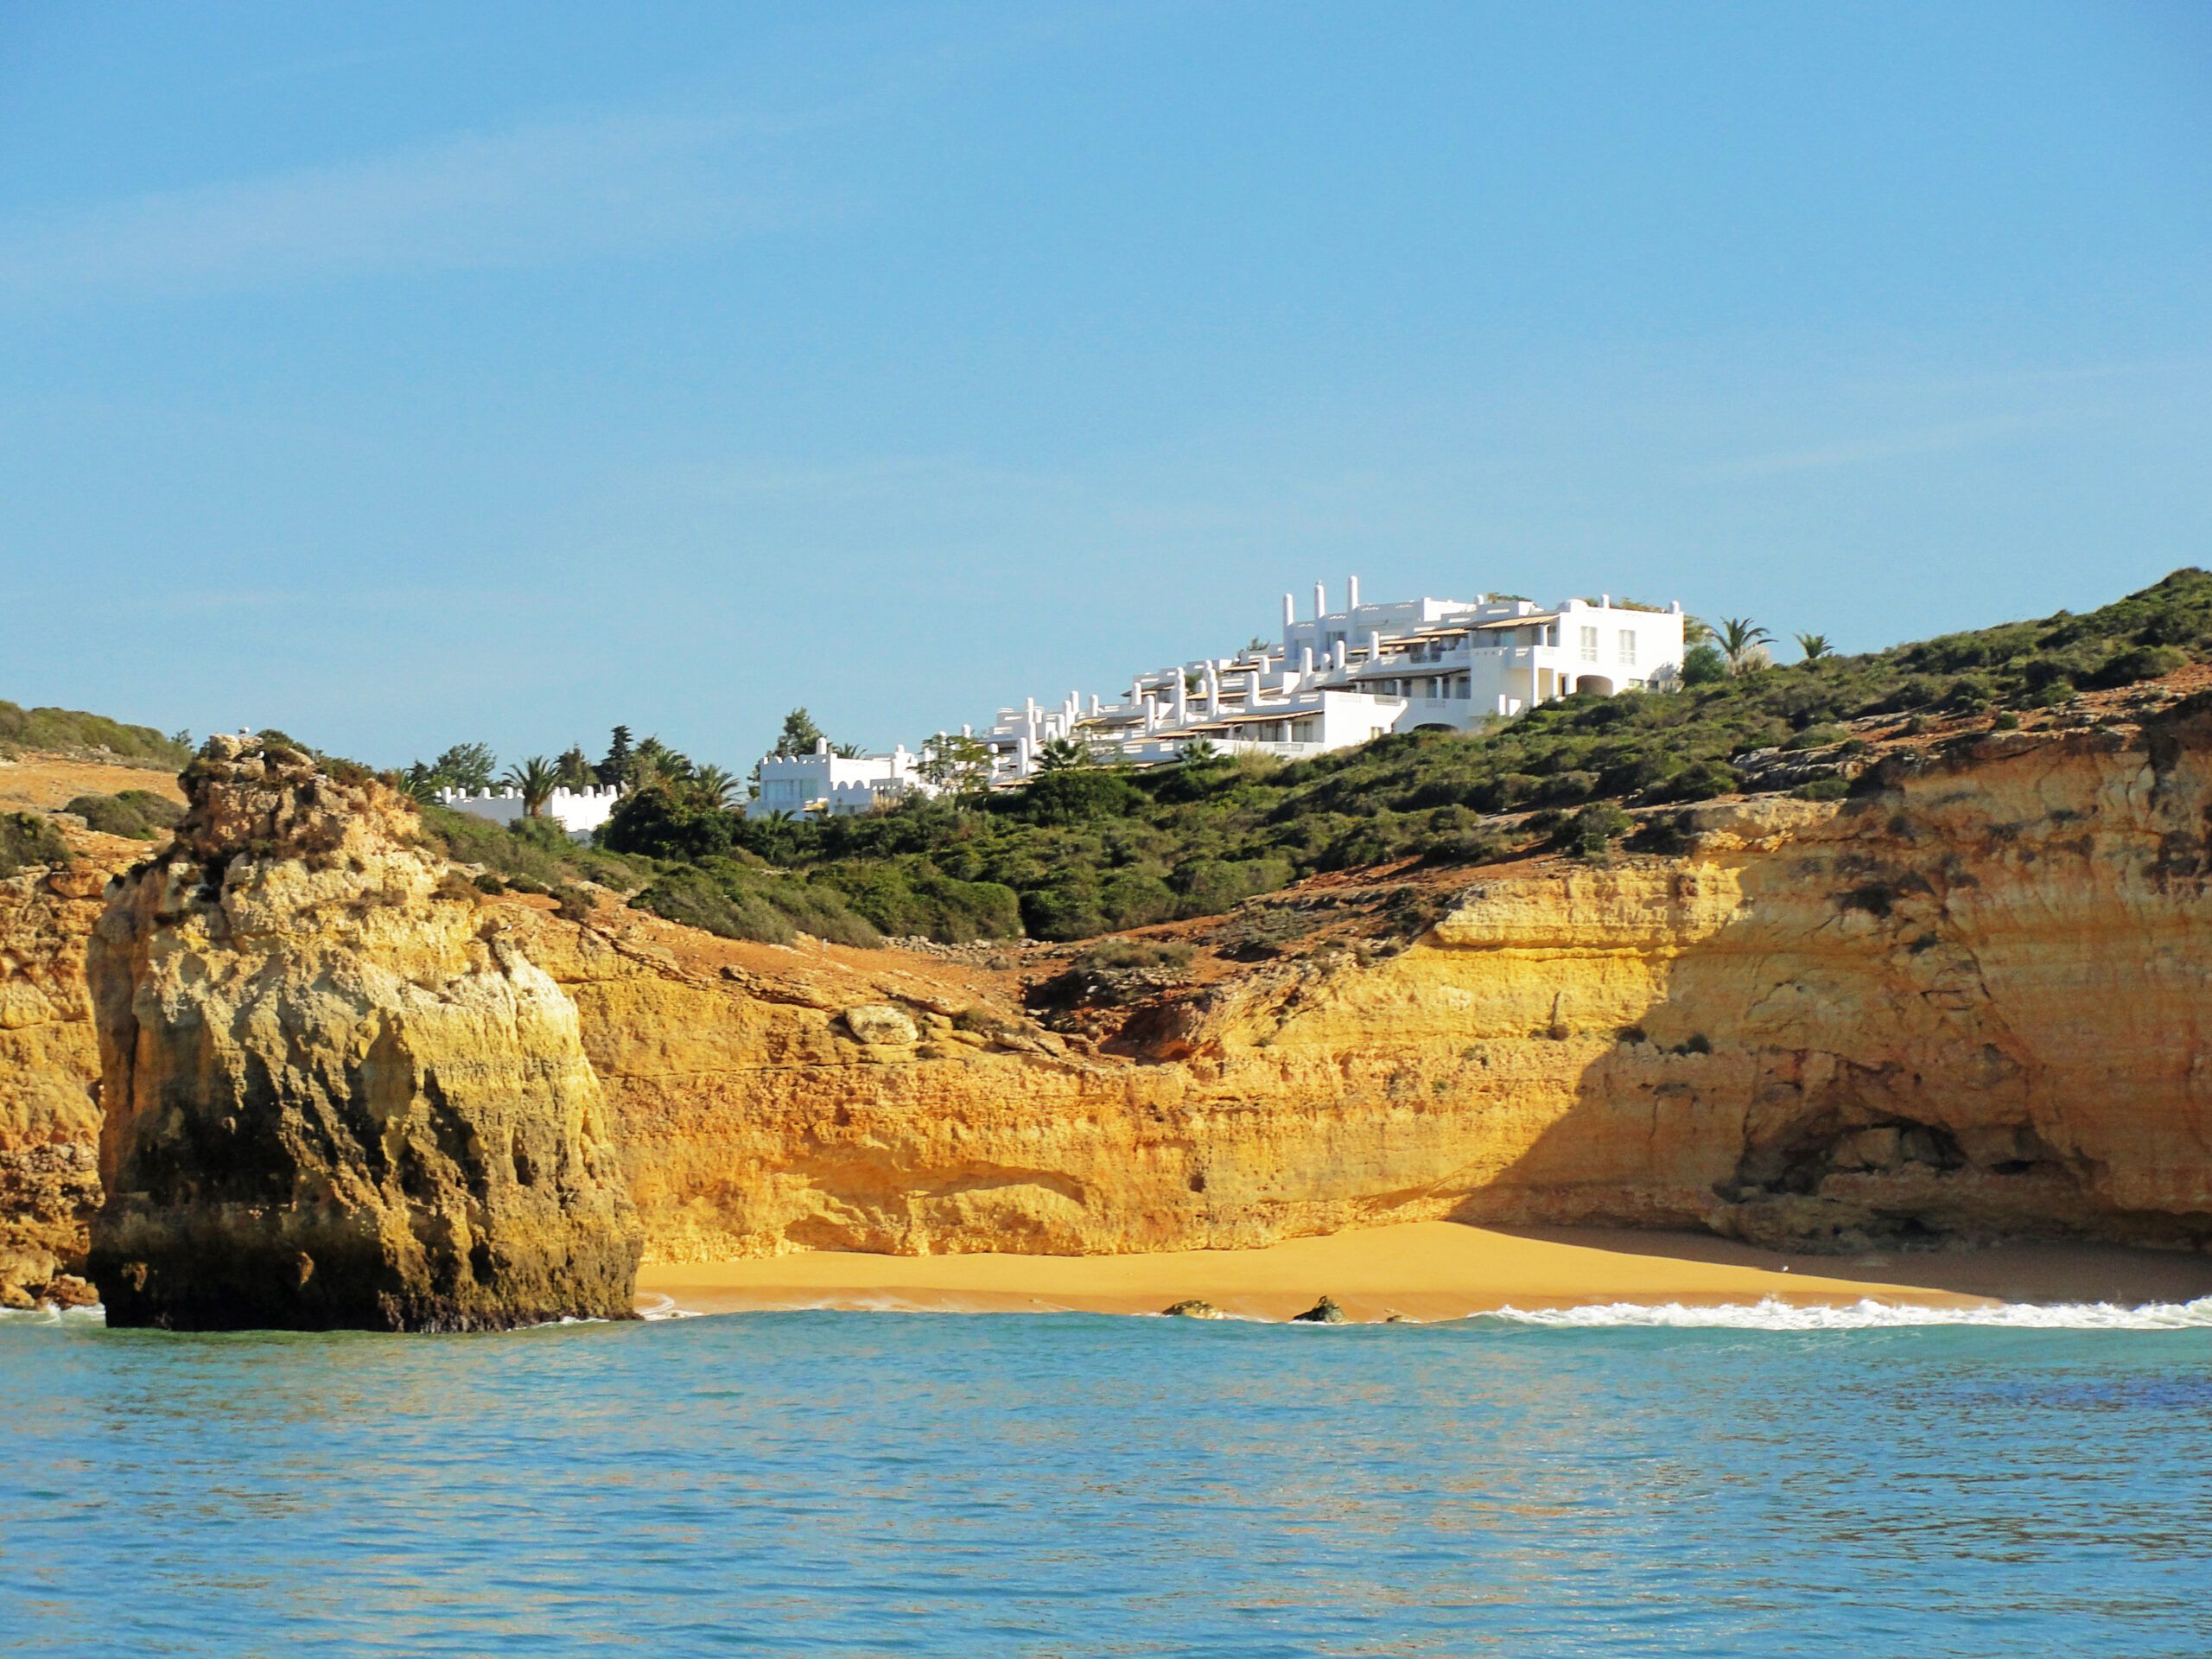 The Algarve Coast, Portugal's most popular tourist destination